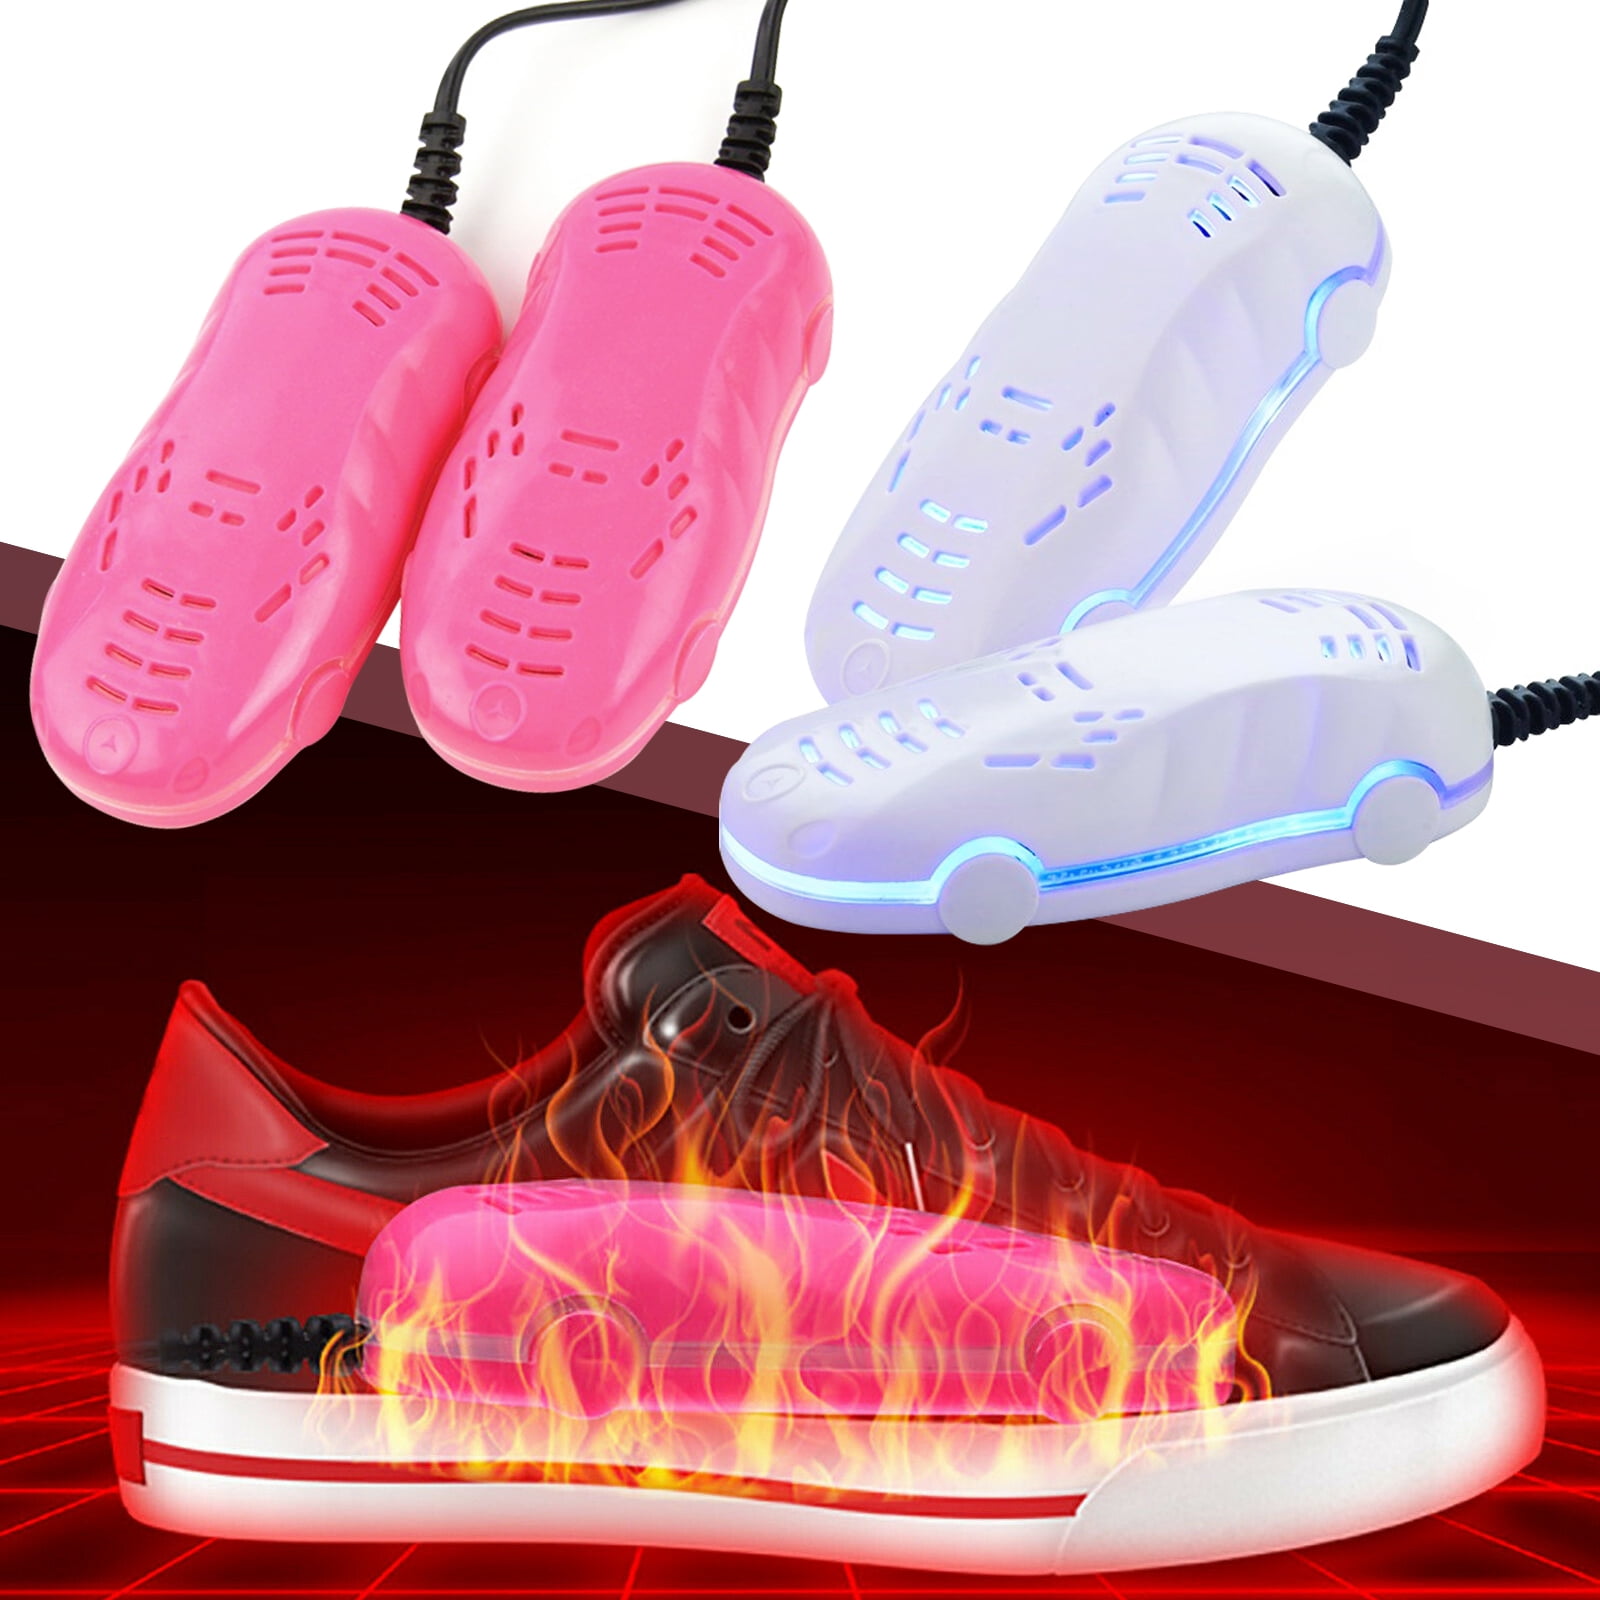 USB Portable Electric Shoe Dryer Boot Deodorant Dehumidify Warmer Heater Machine 